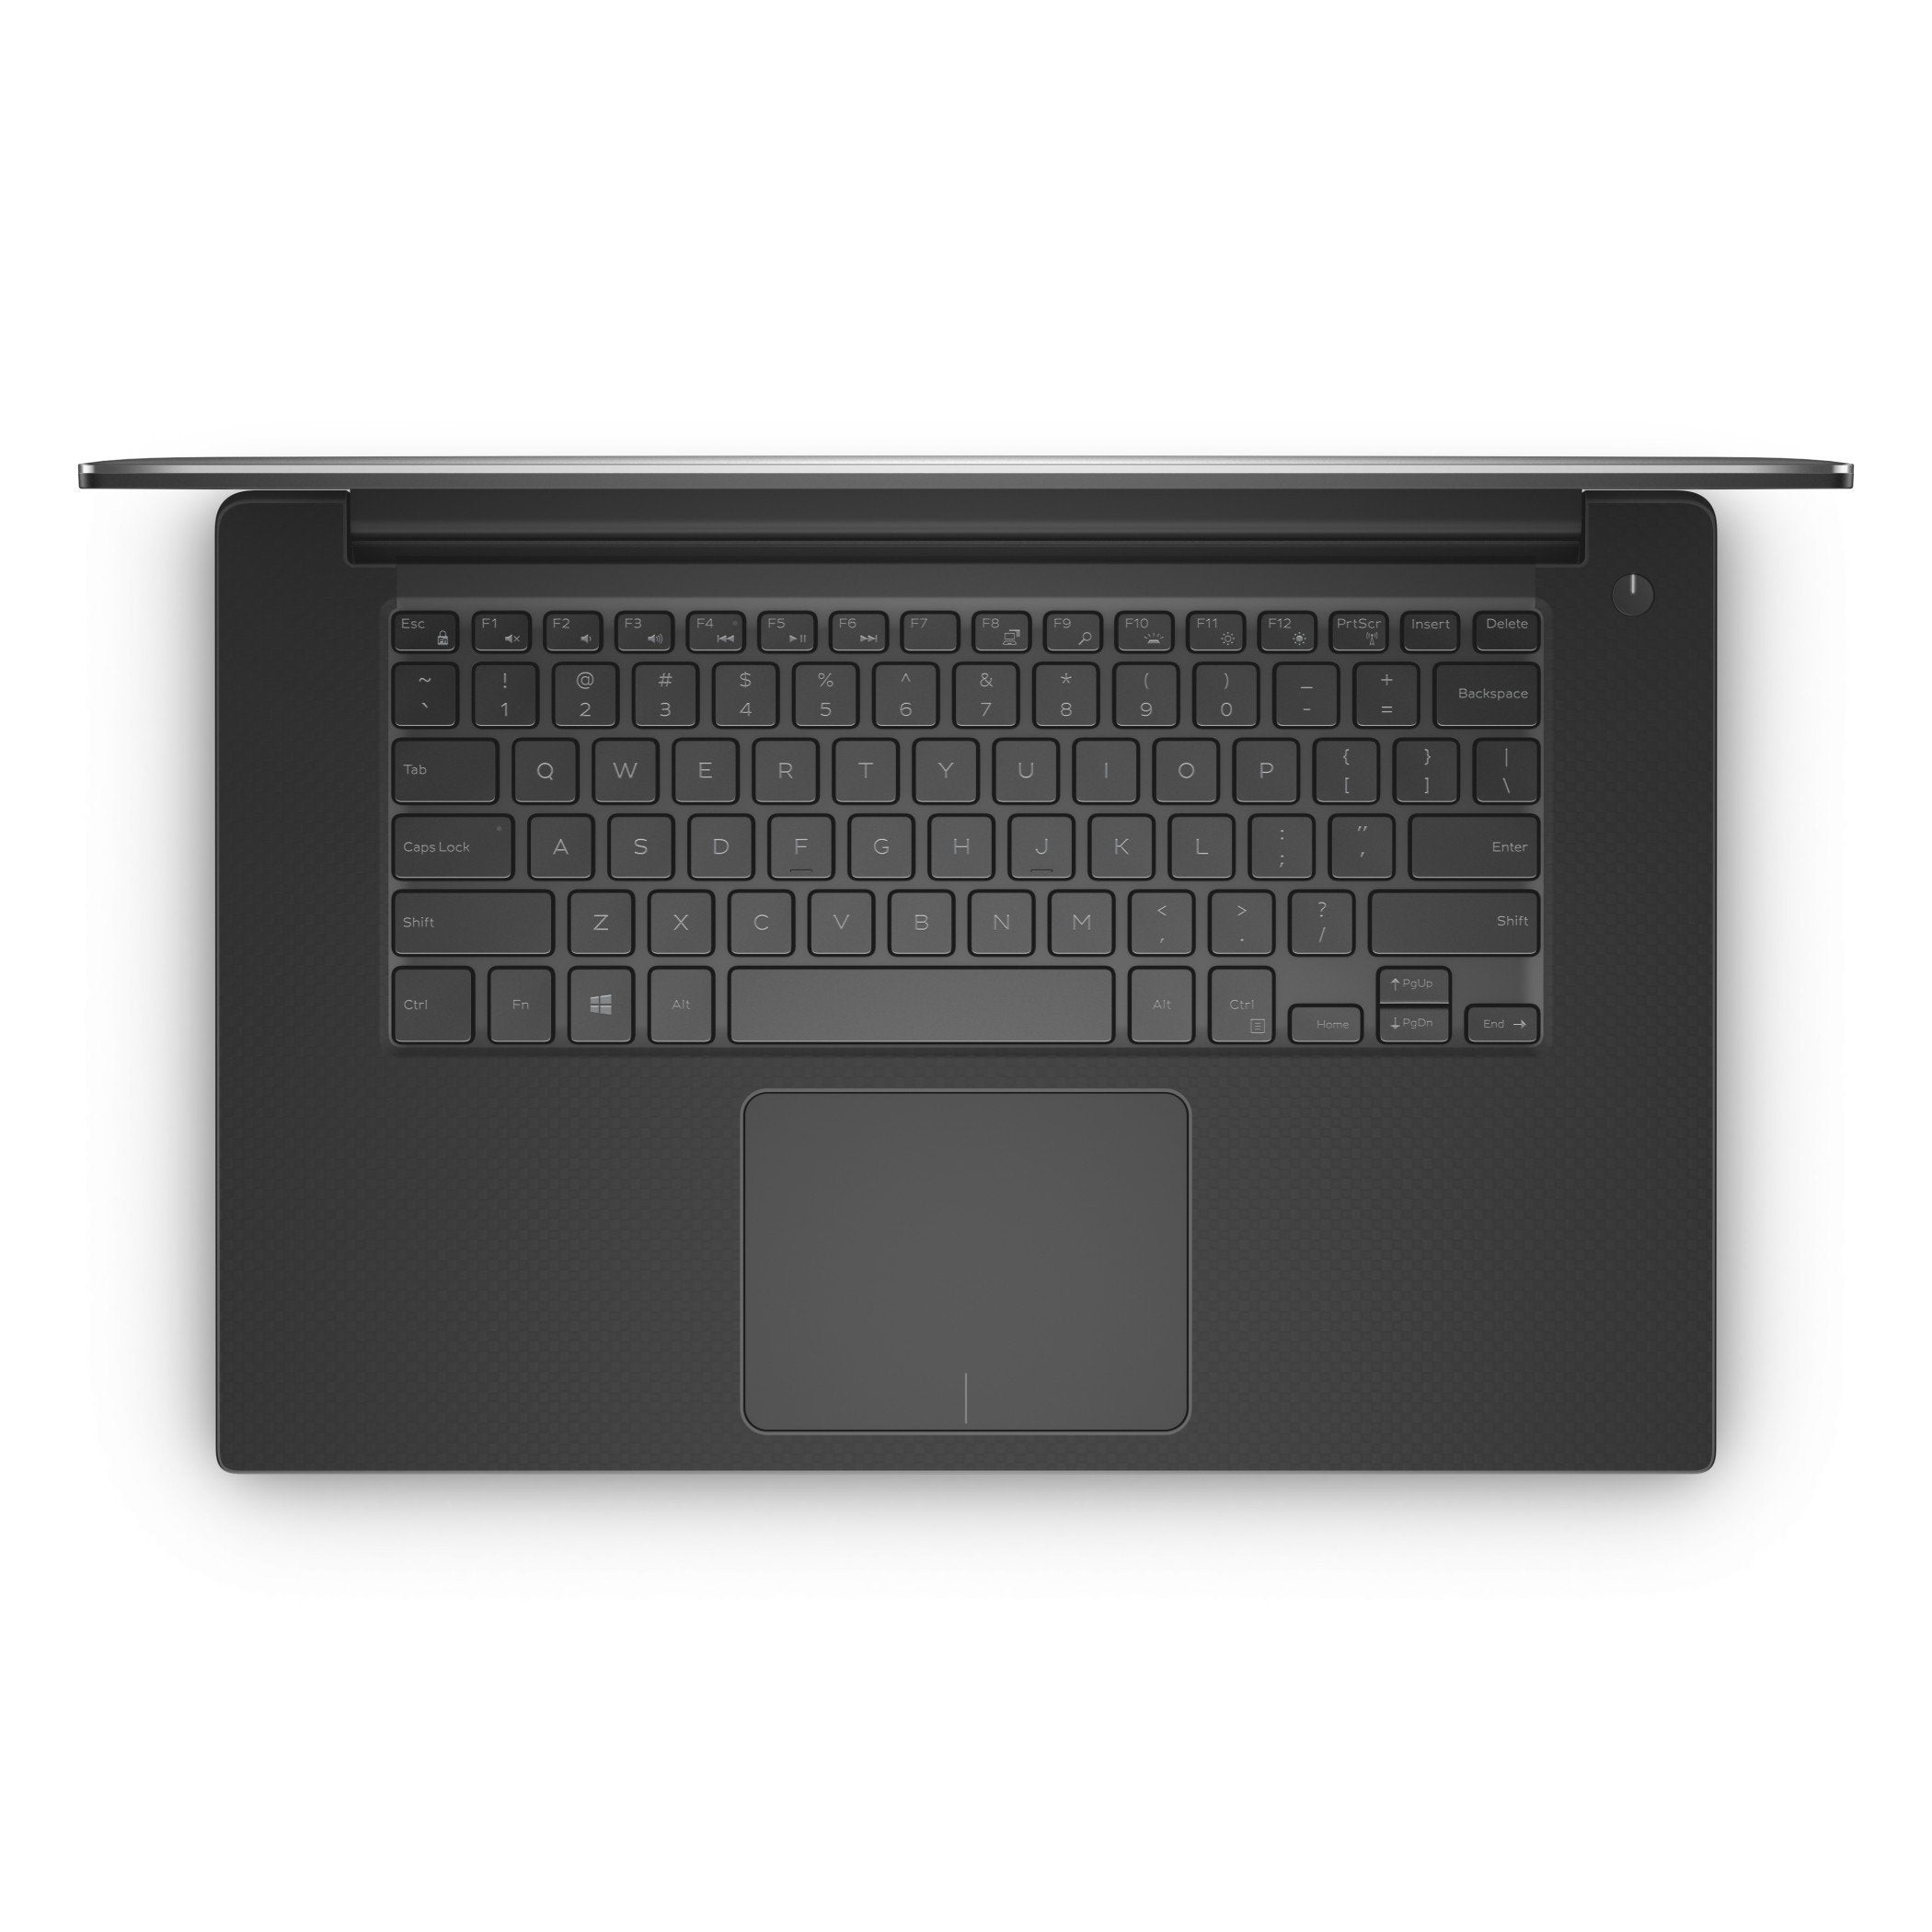 Dell XPS 15 9560 15.6” 4K UHD Touch Laptop – i7-7700HQ (3.8GHz), 16GB DDR4 RAM, 1TB PCIe Gen 4.0 x4 NVMe, NVIDIA GeForce GTX 1050, SD Card Reader, Windows 10 Pro, Backlit Keyboard (Renewed)